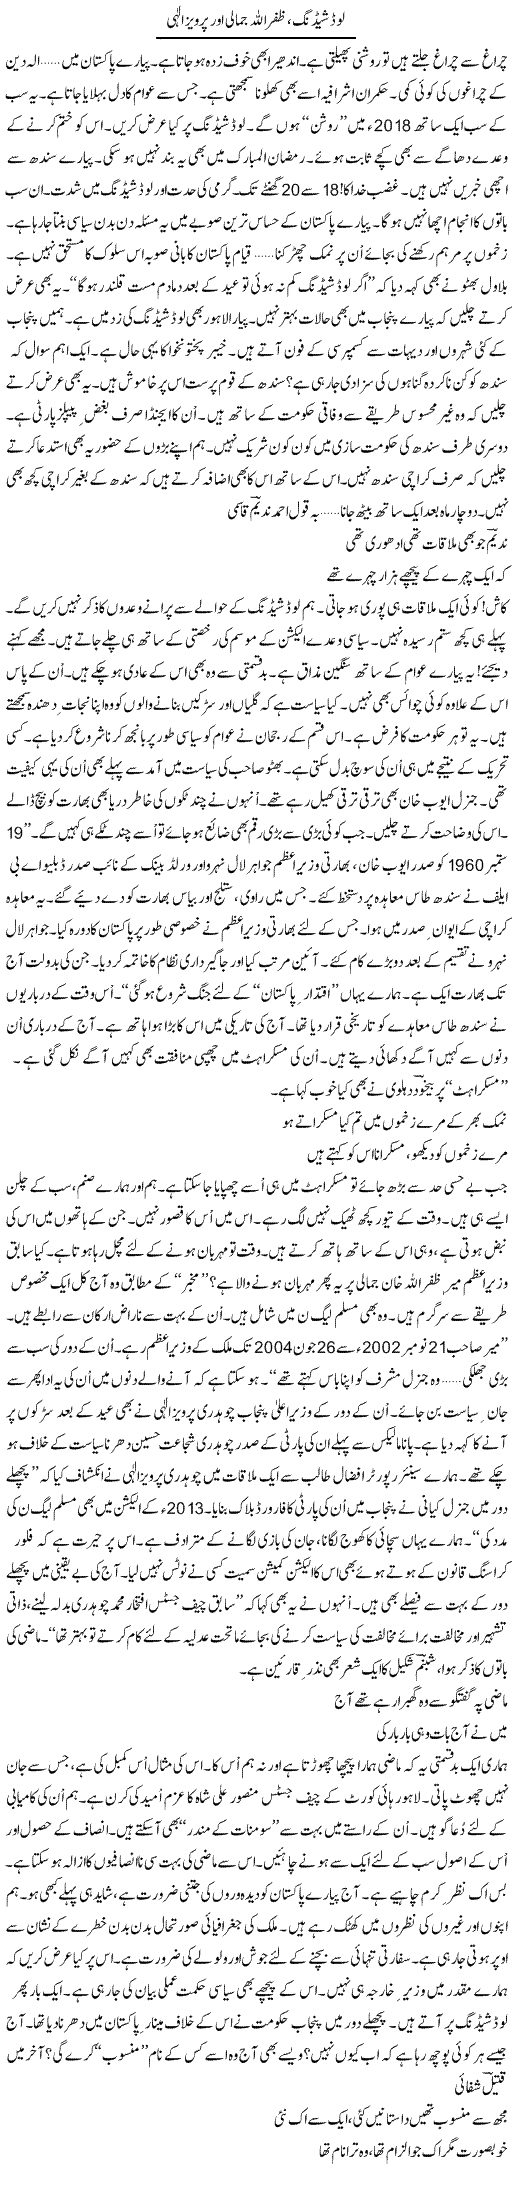 Load-shedding, Zafar Ullah Jamali Aor Pervaiz Elahi | Ejaz Hafeez Khan | Daily Urdu Columns